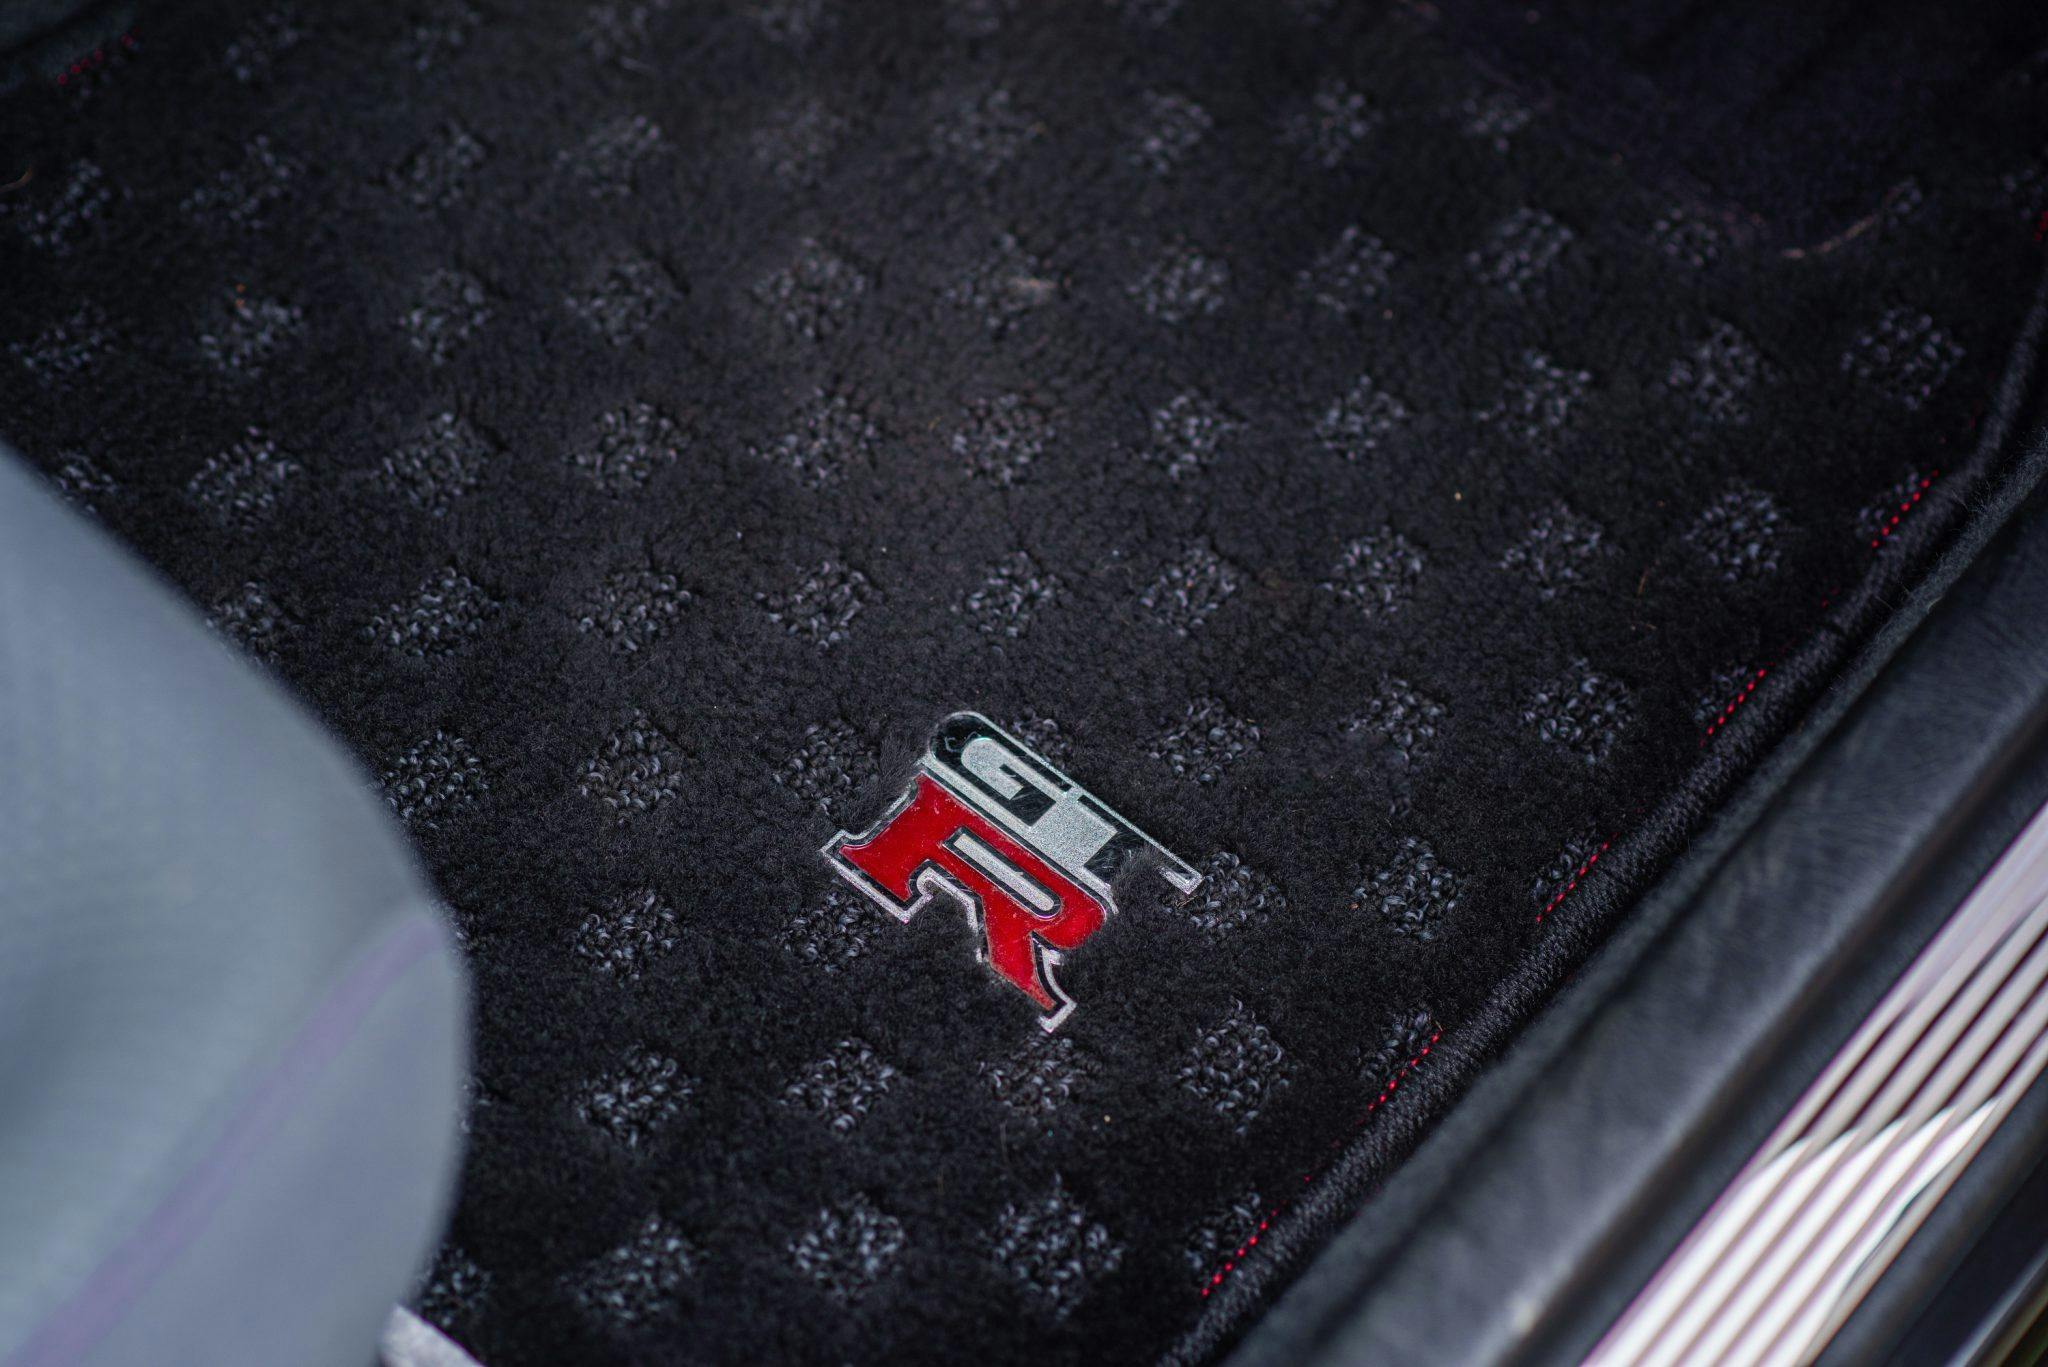 1999 Nissan Skyline GT-R V-Spec carpet mat logo detail